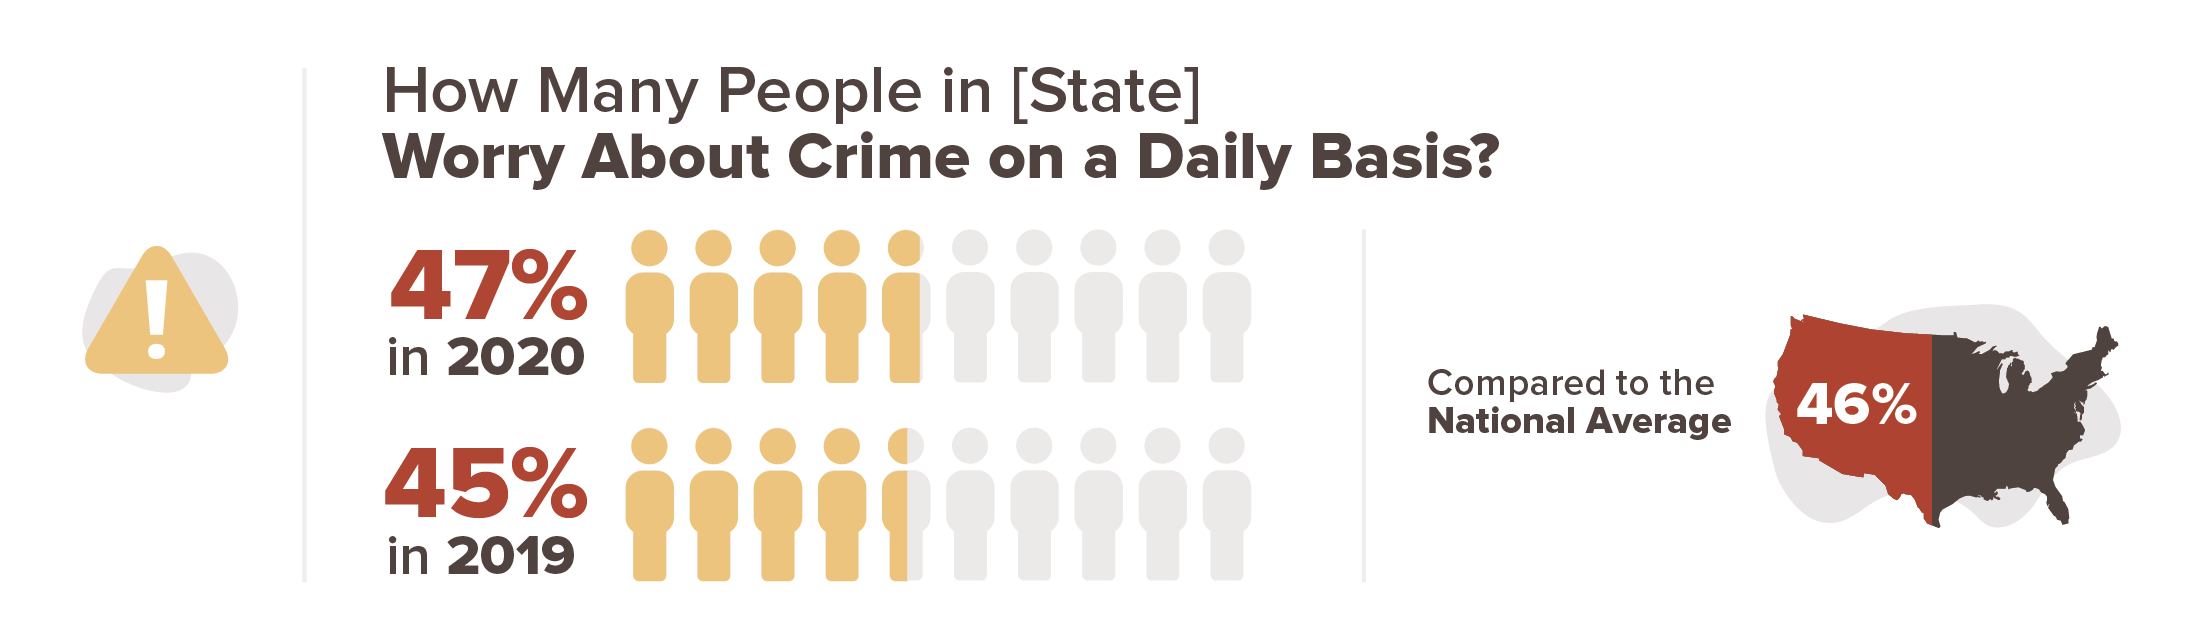 Connecticut crime stats infographic